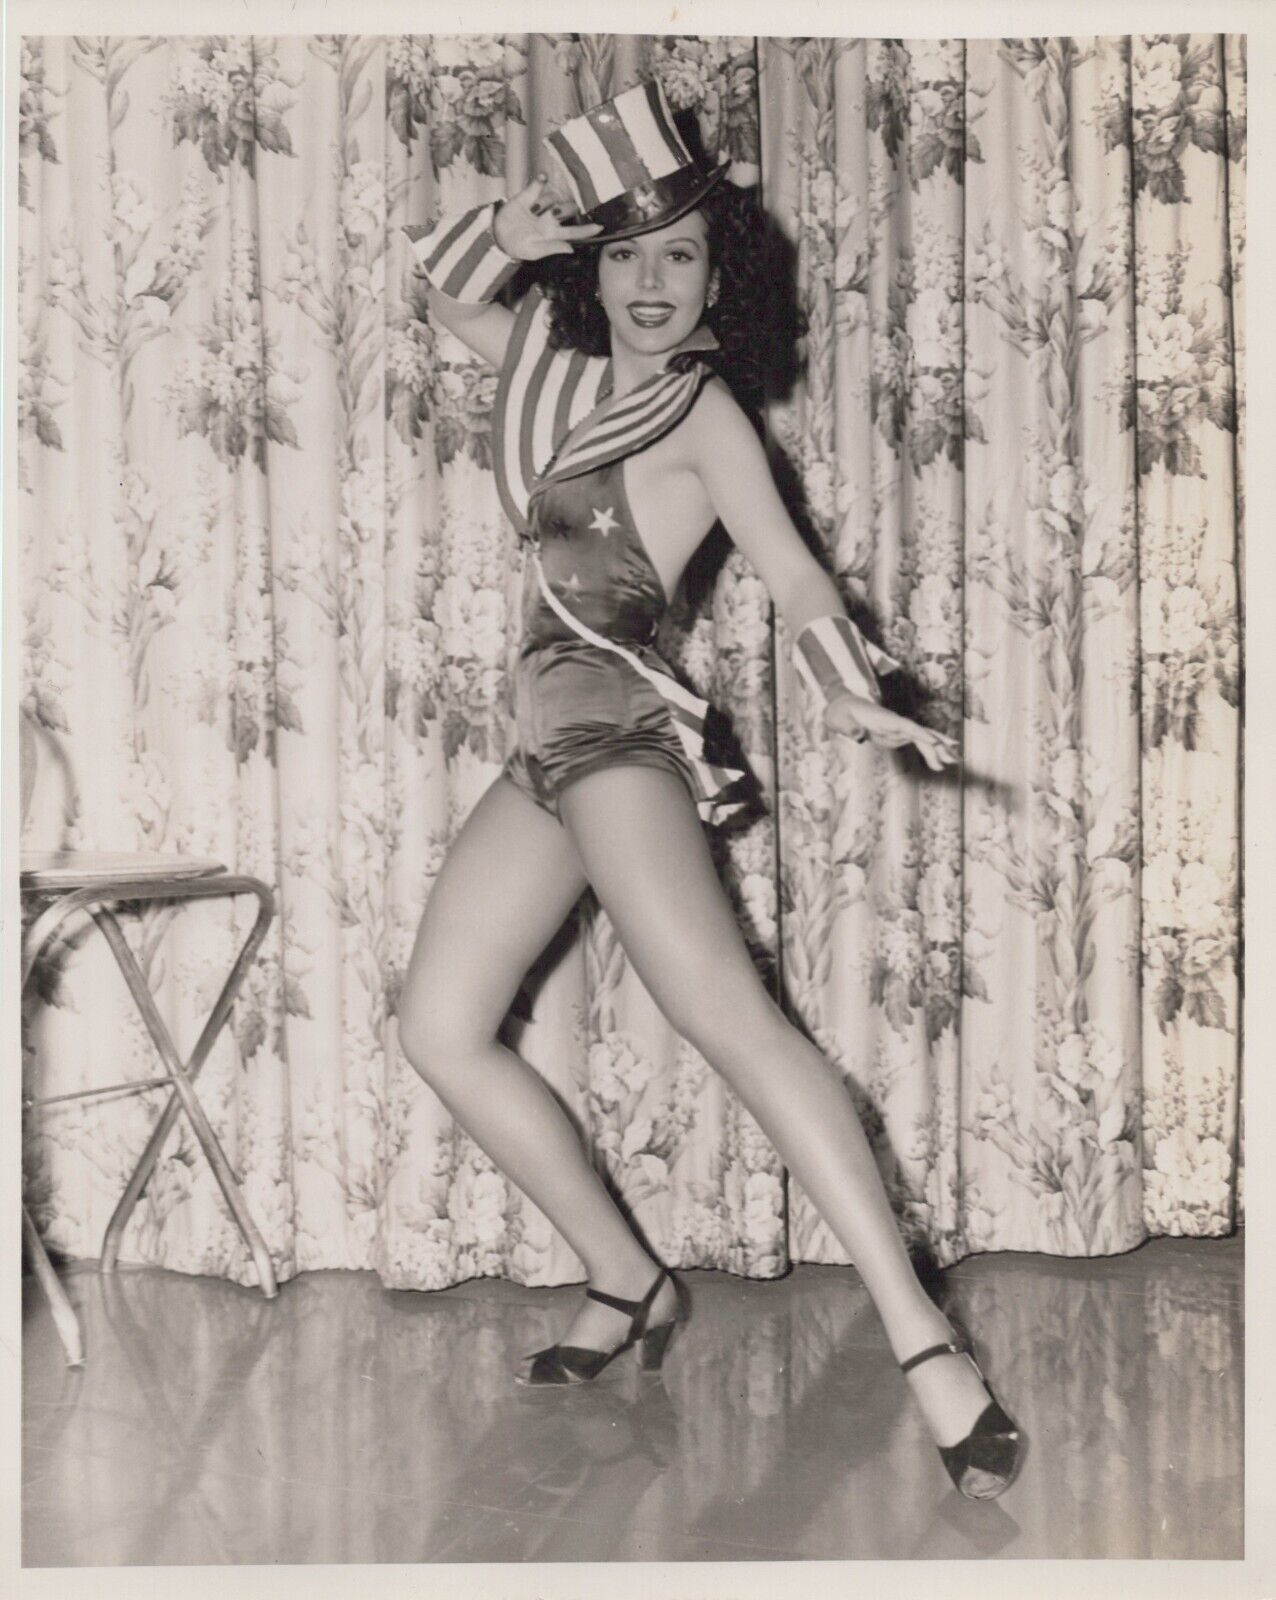 Ann Miller (1940s) ❤ Leggy Cheesecake Original Vintage Hollywood Photo K 49